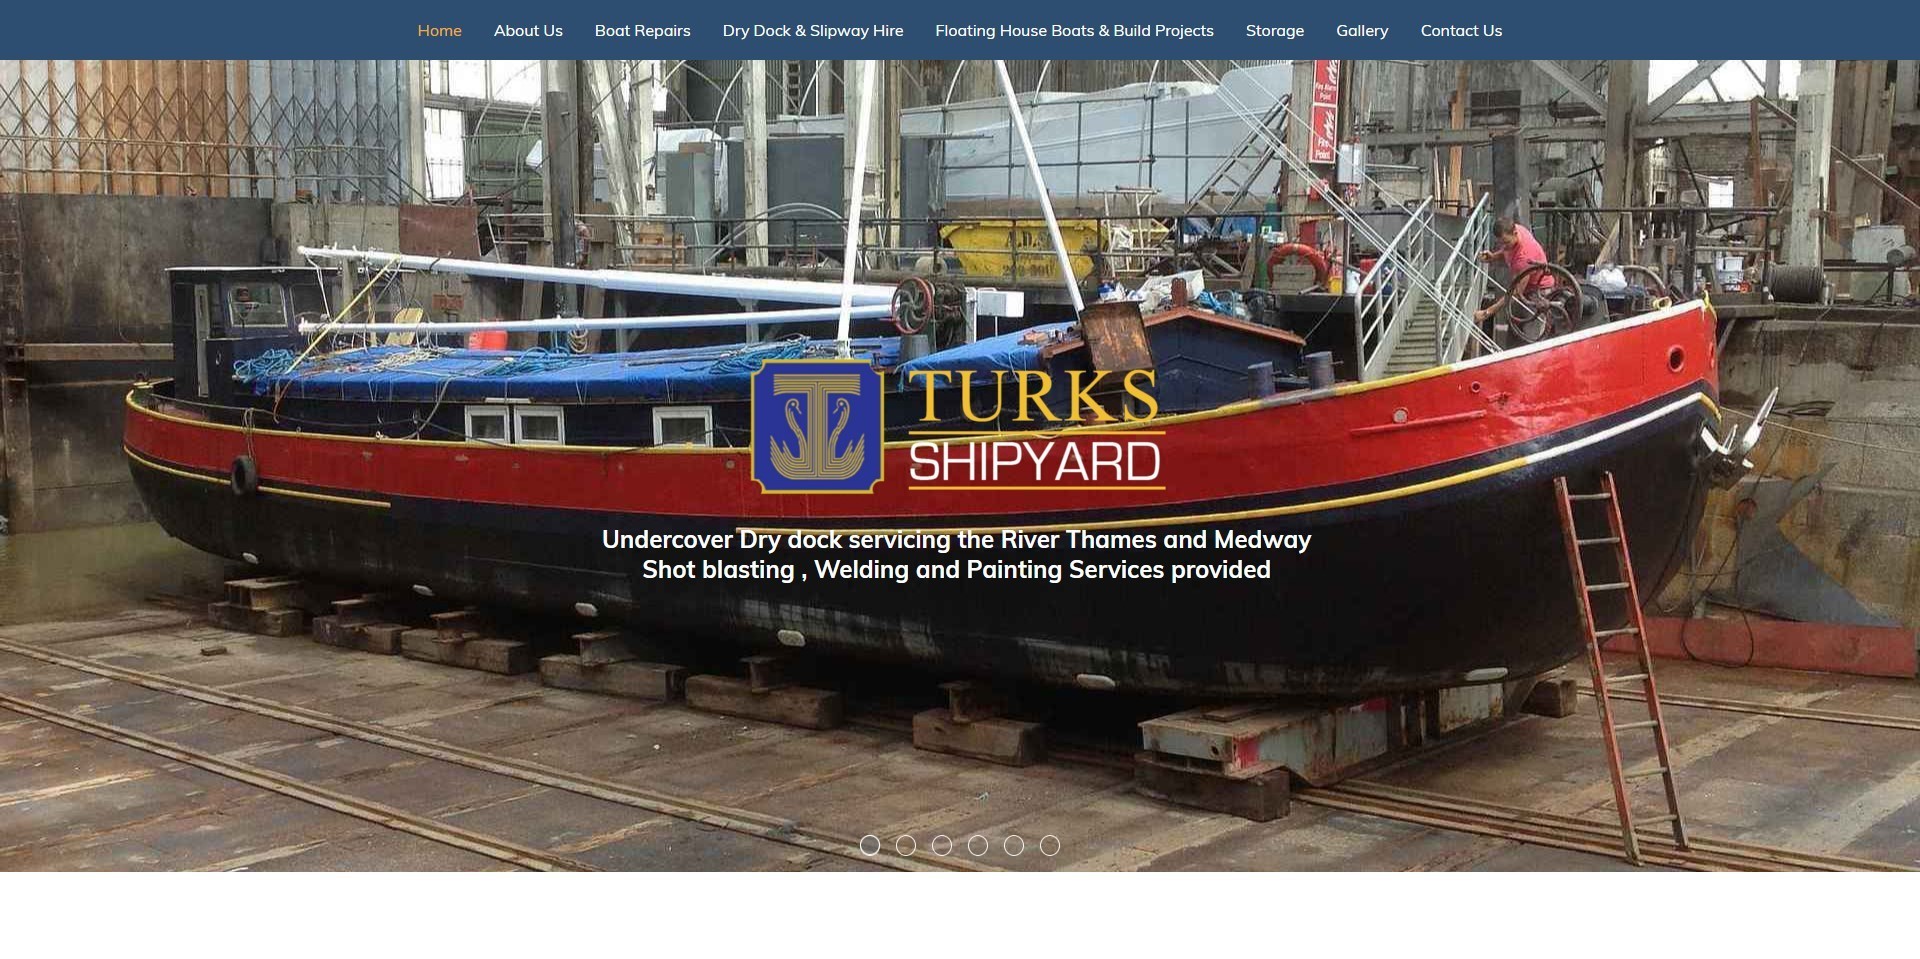 The new Turks Shipyard, designed by it'seeze, displayed on desktop